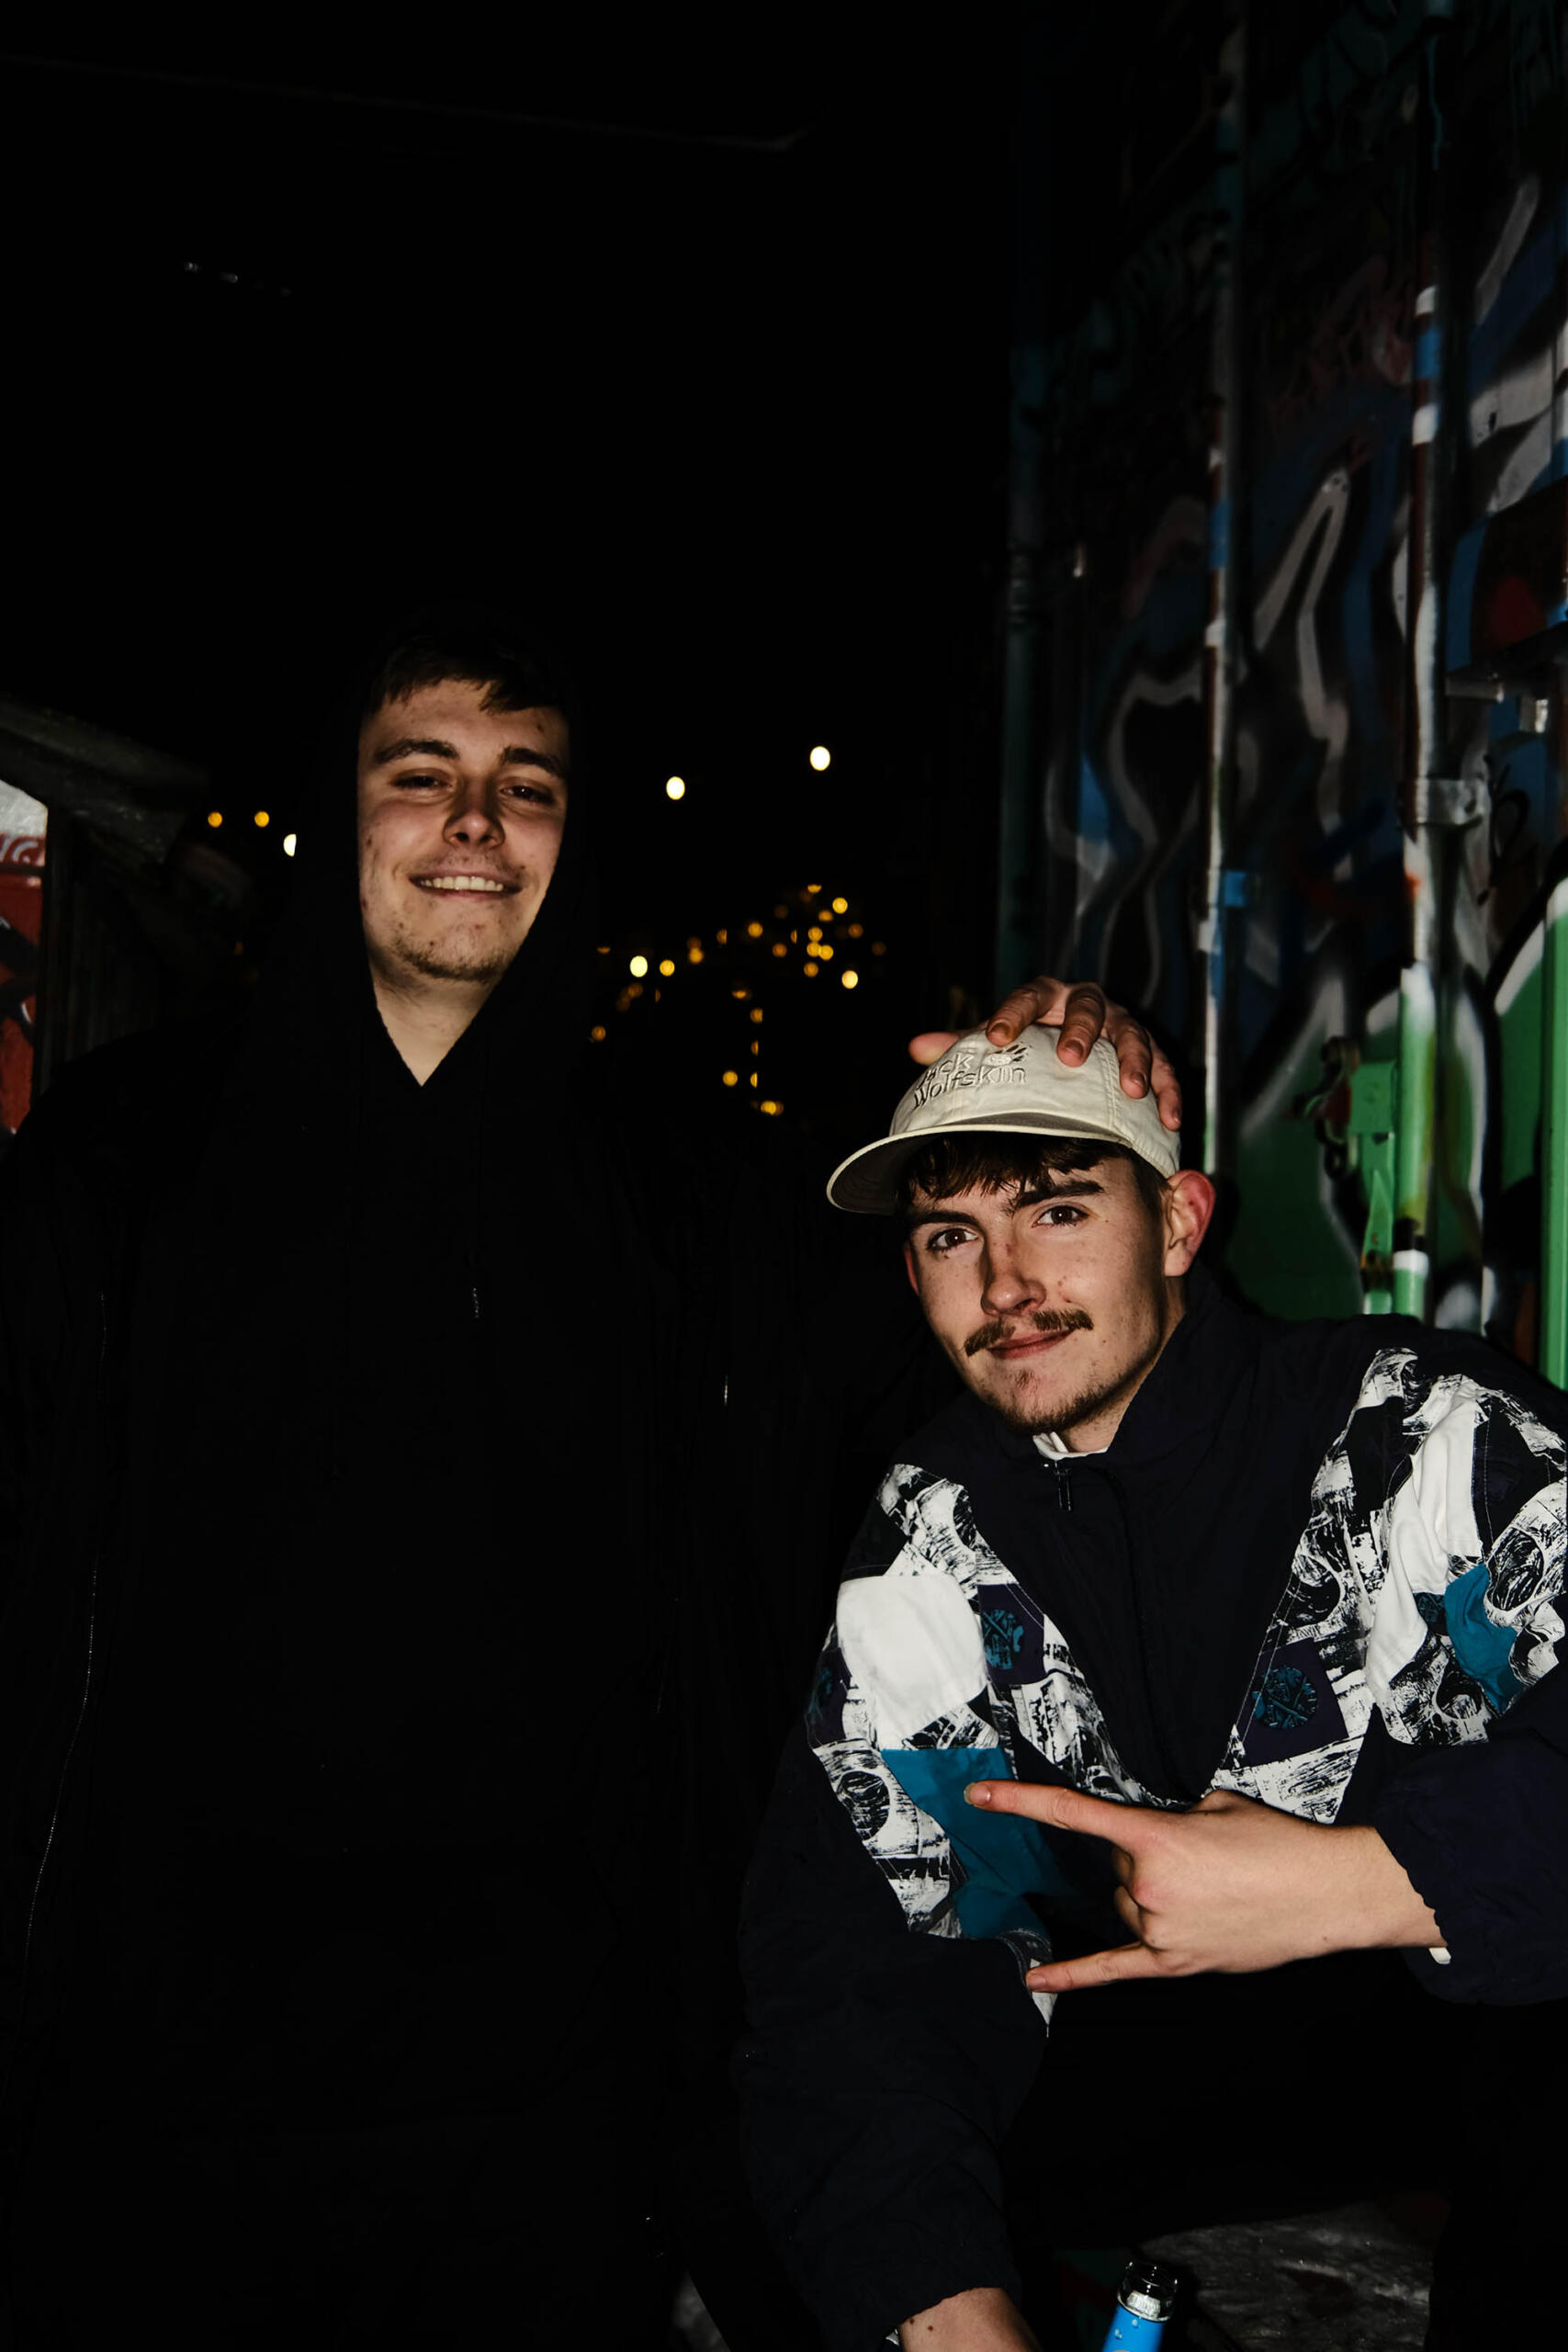 Two young men next to a graffiti wall at night.